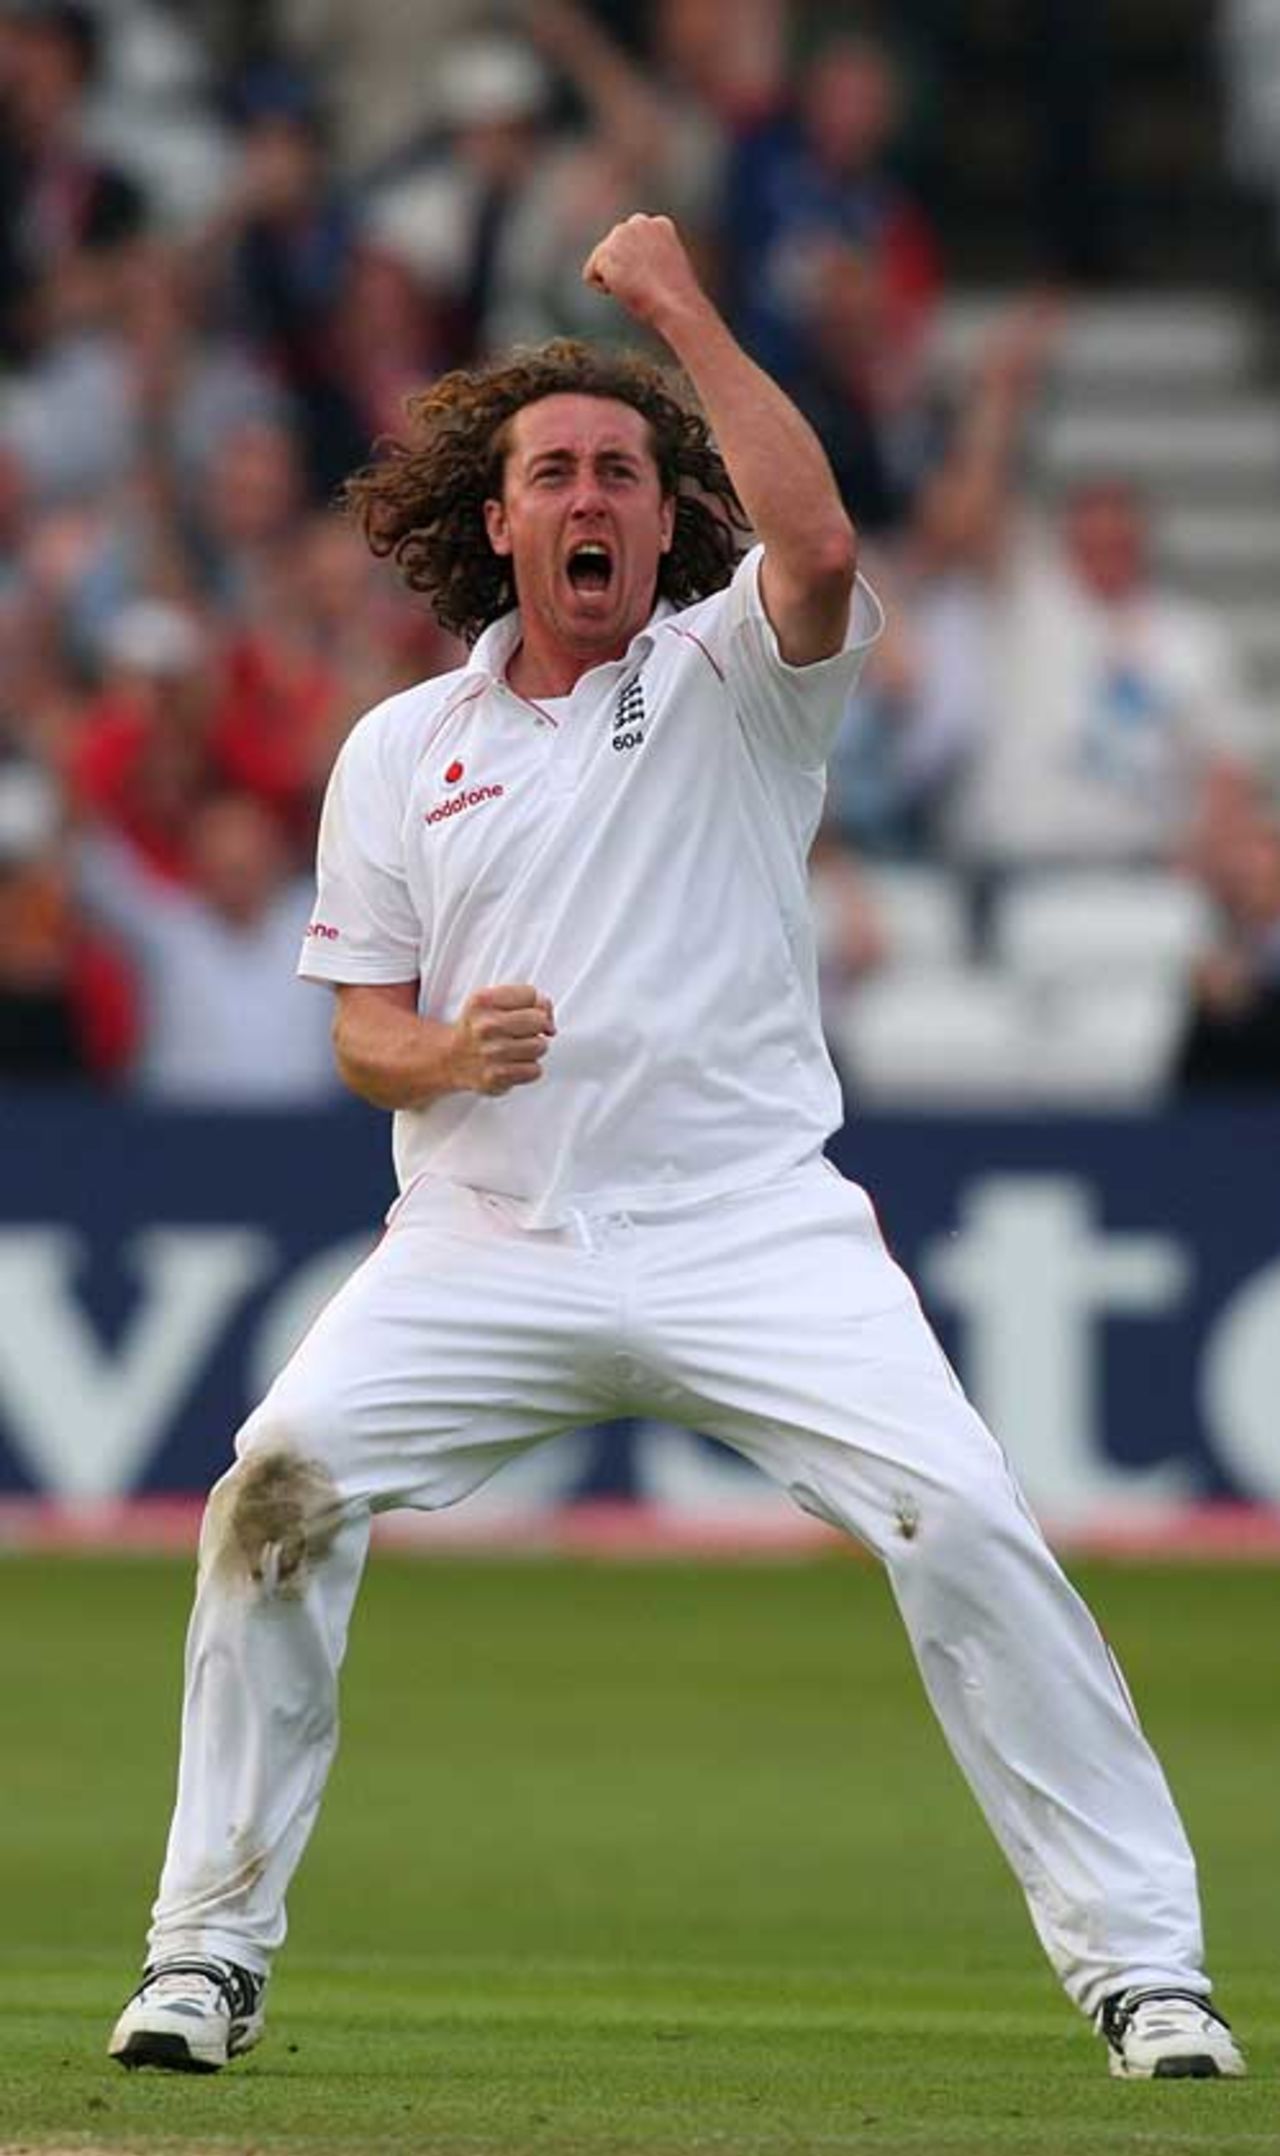 Ryan Sidebottom is pumped after removing Daniel Flynn, England v New Zealand, 3rd Test, Trent Bridge, June 7, 2008